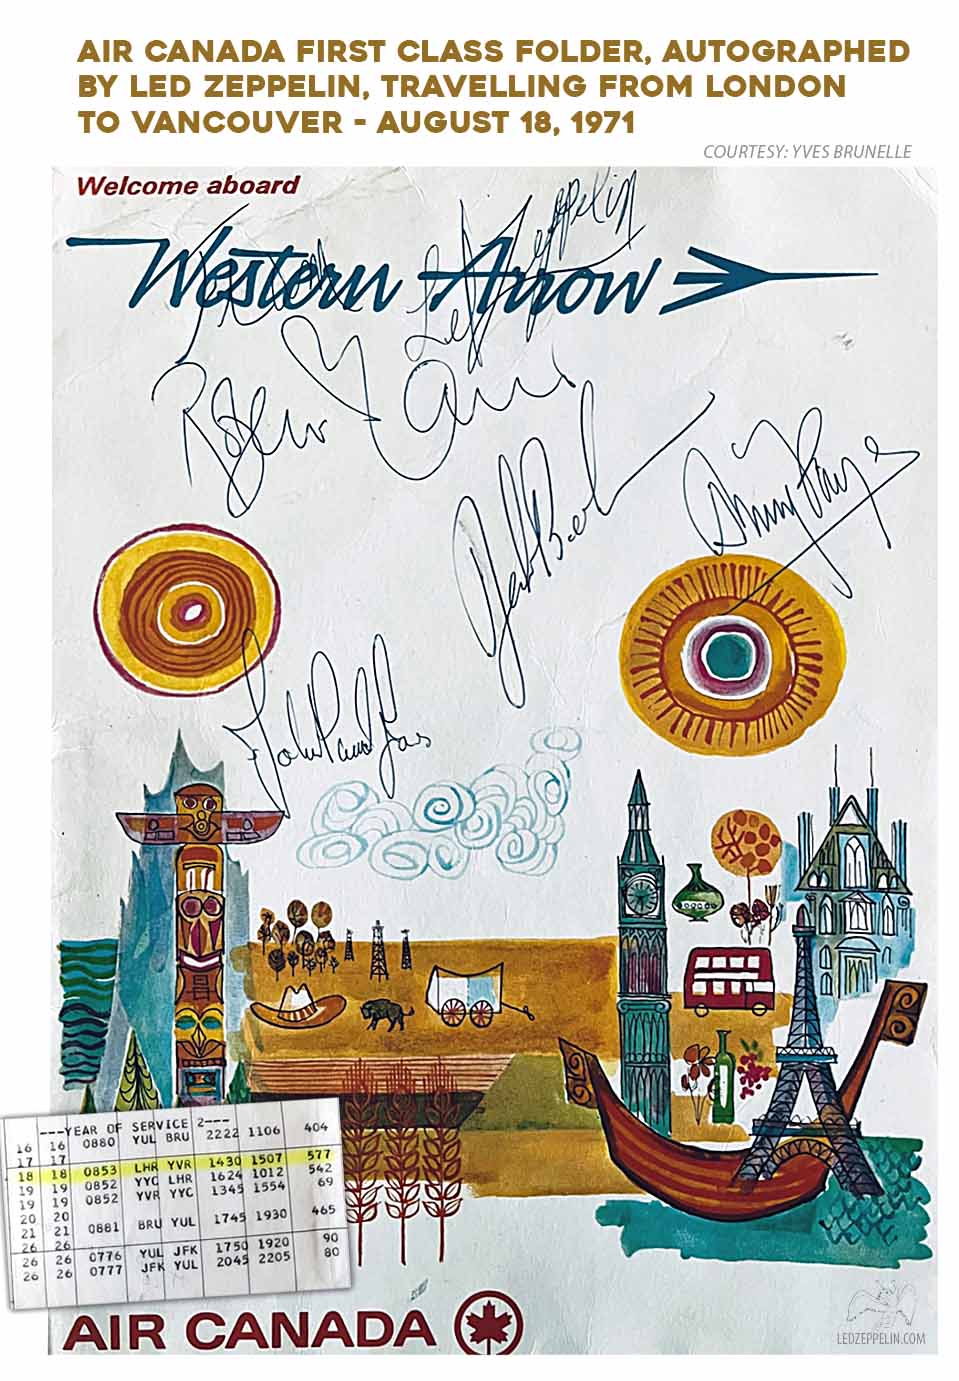 Vancouver 8/18/71 - Led Zeppelin Autographed Air Canada Folder